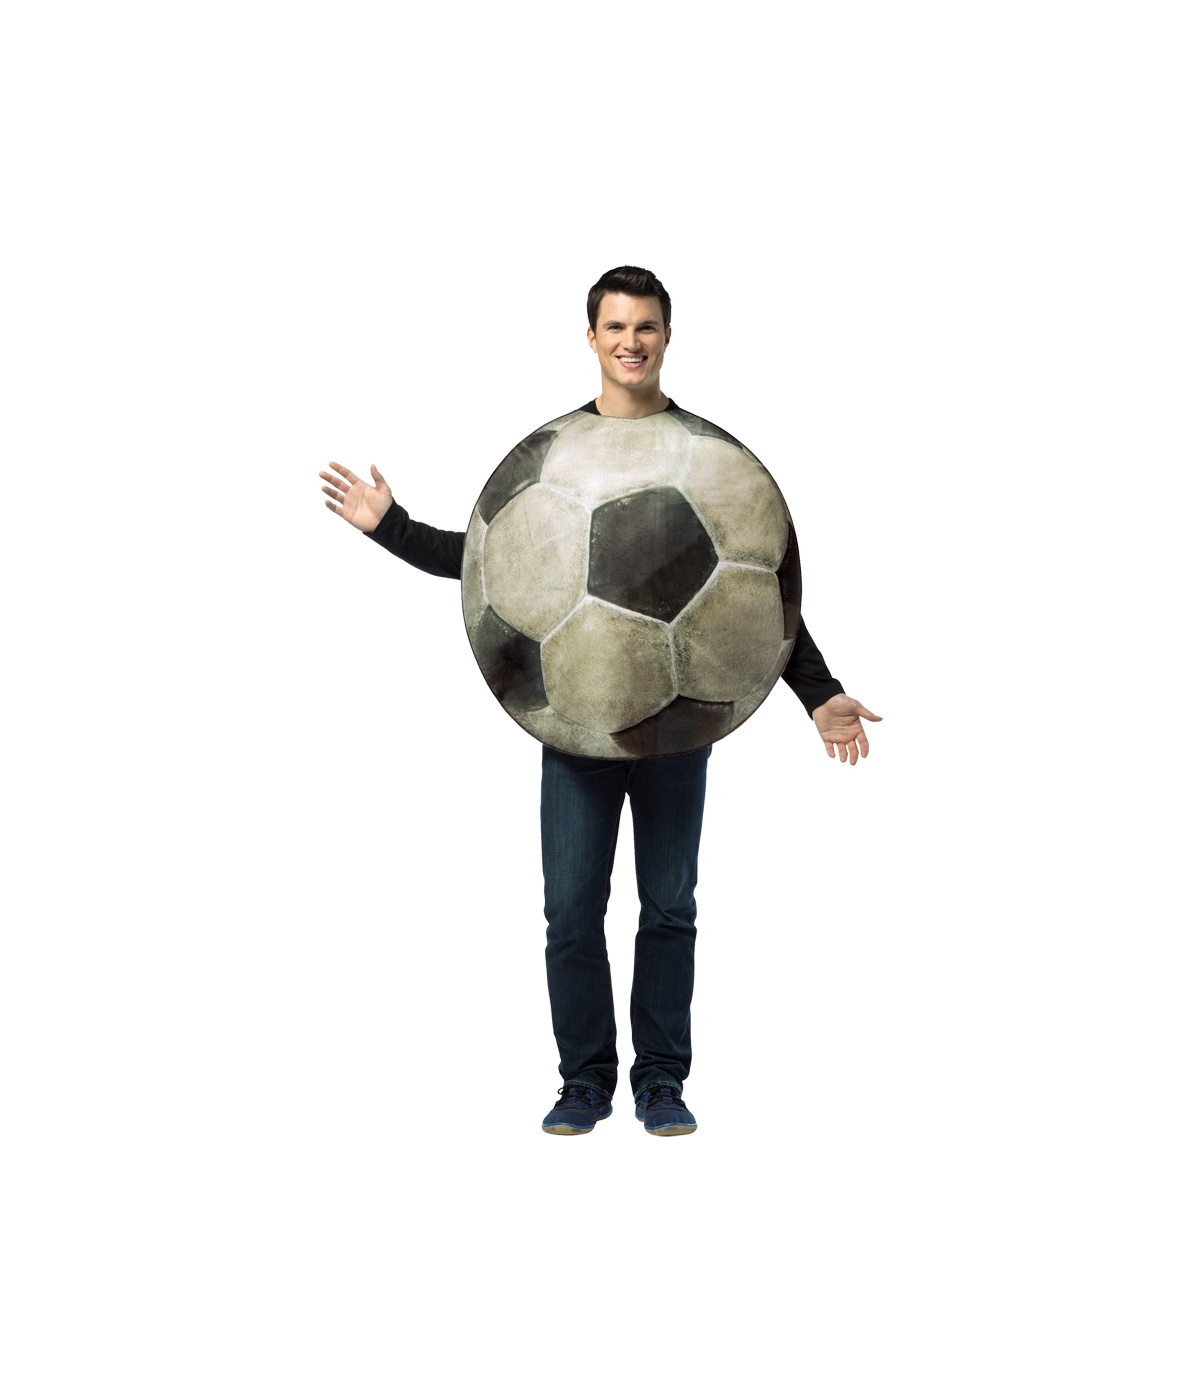  Real Soccer Ball Costume